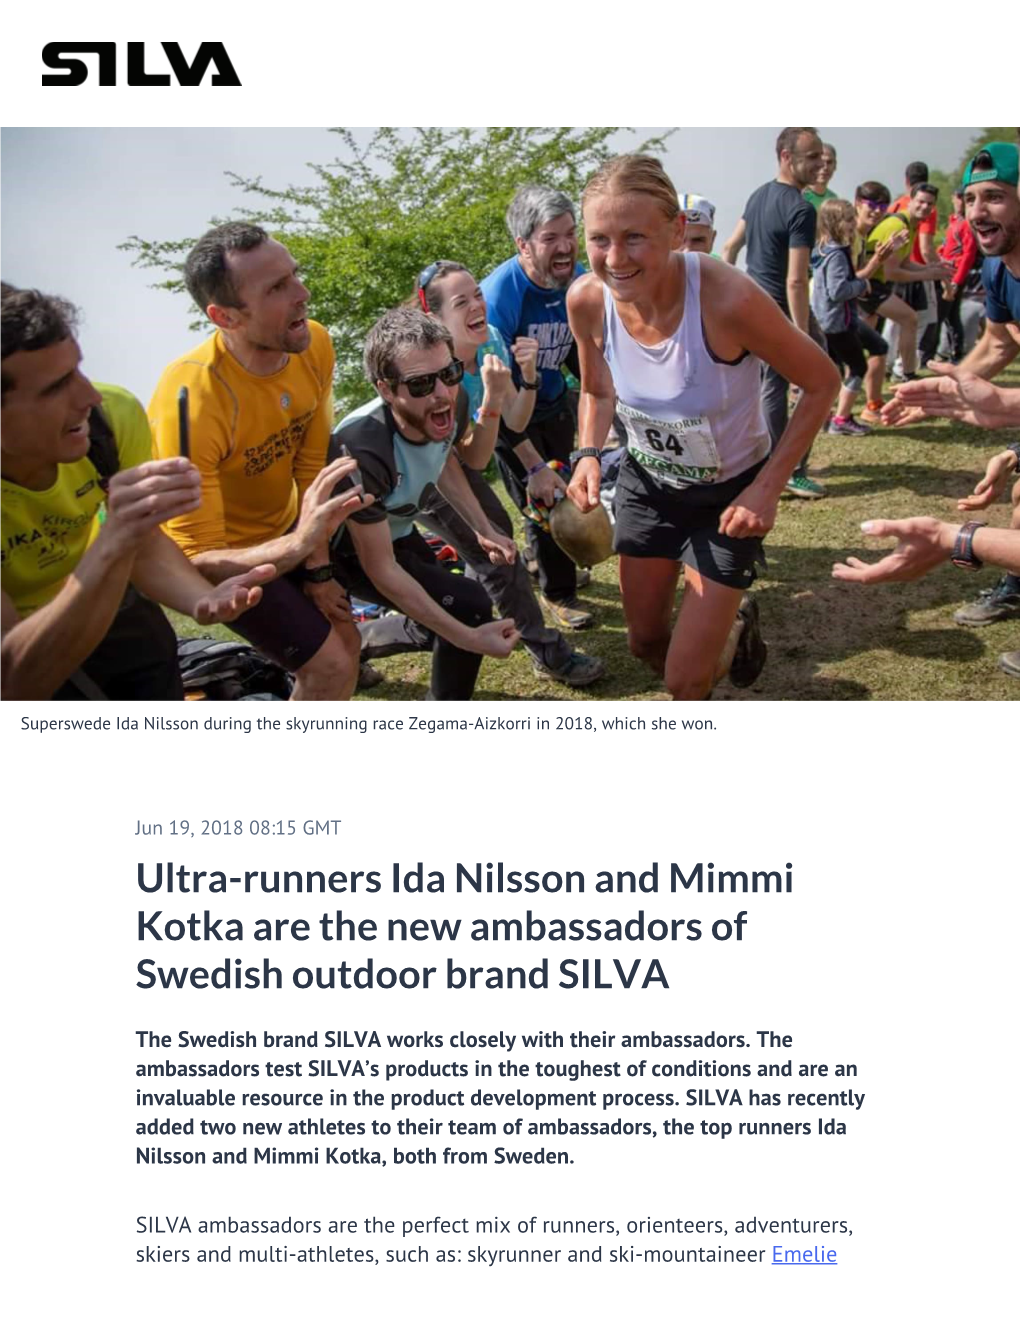 Ultra-Runners Ida Nilsson and Mimmi Kotka Are the New Ambassadors of Swedish Outdoor Brand SILVA